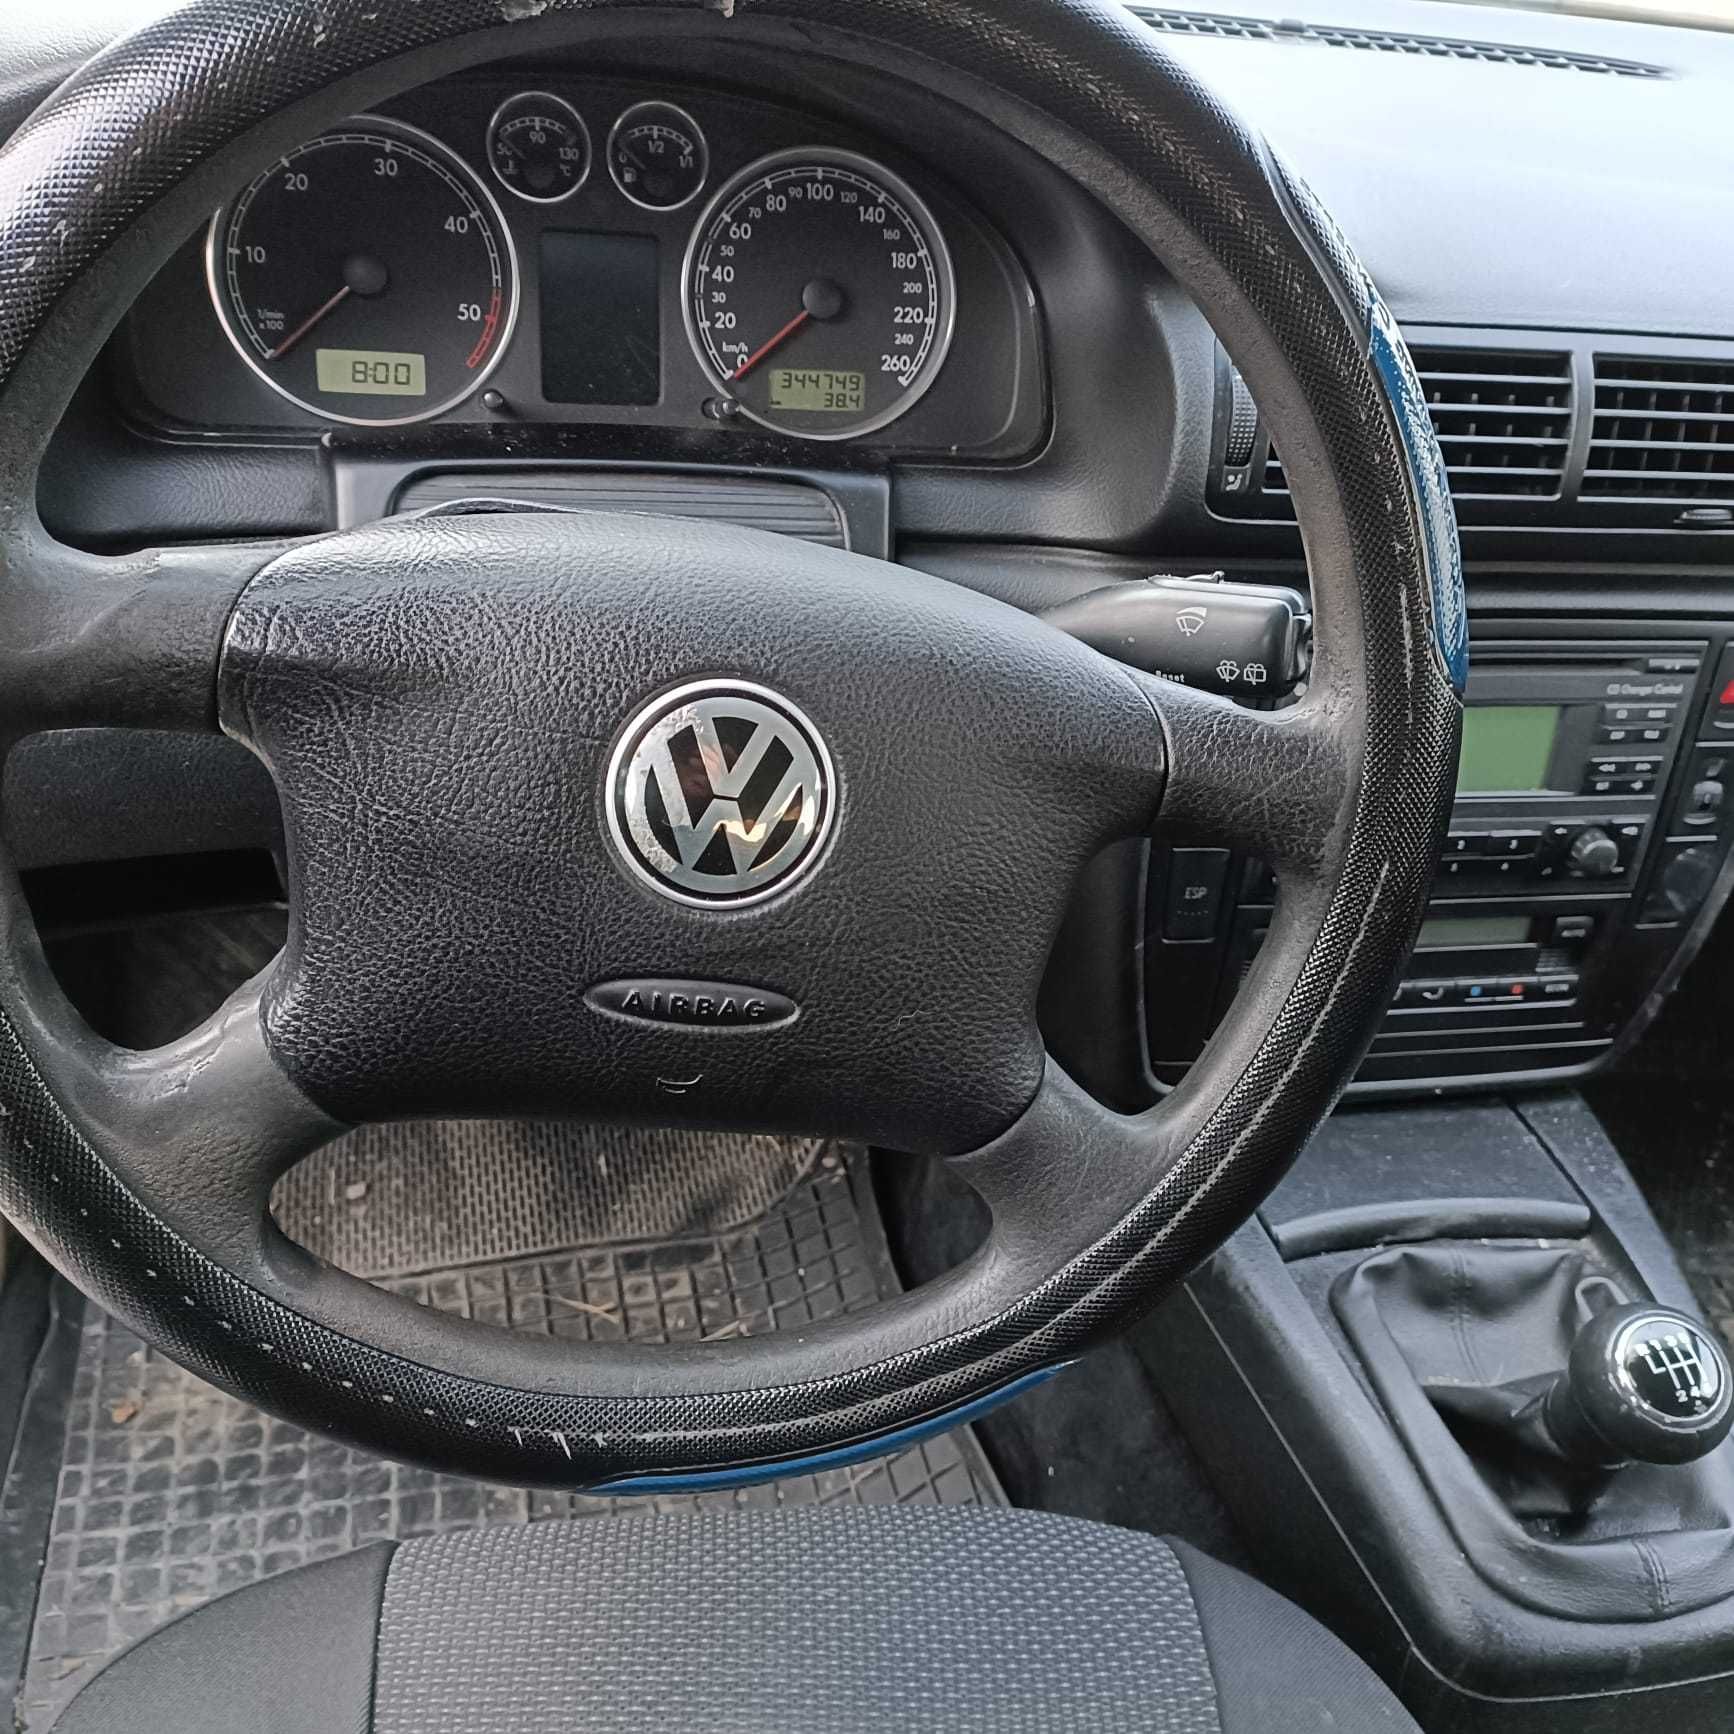 VW Passat 1,9 TDI